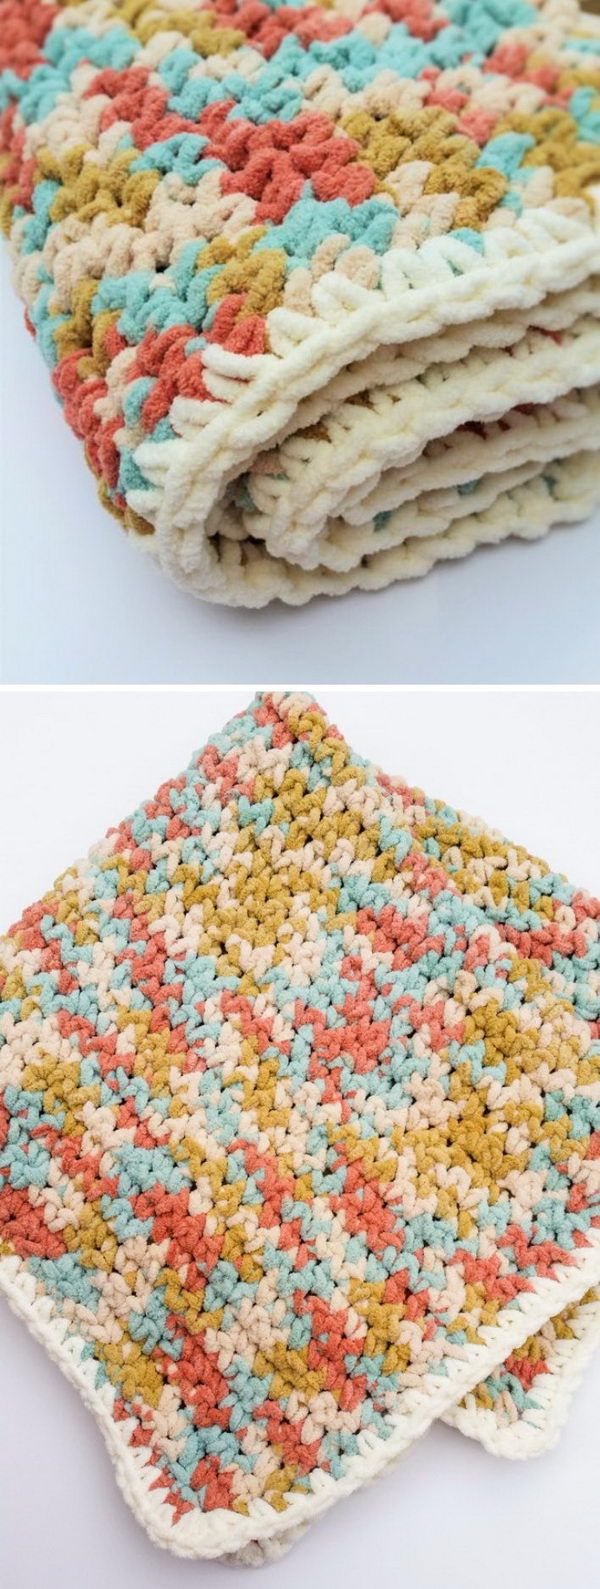 Crochet Patterns Baby Blankets 30 Free Crochet Patterns For Blankets Hative